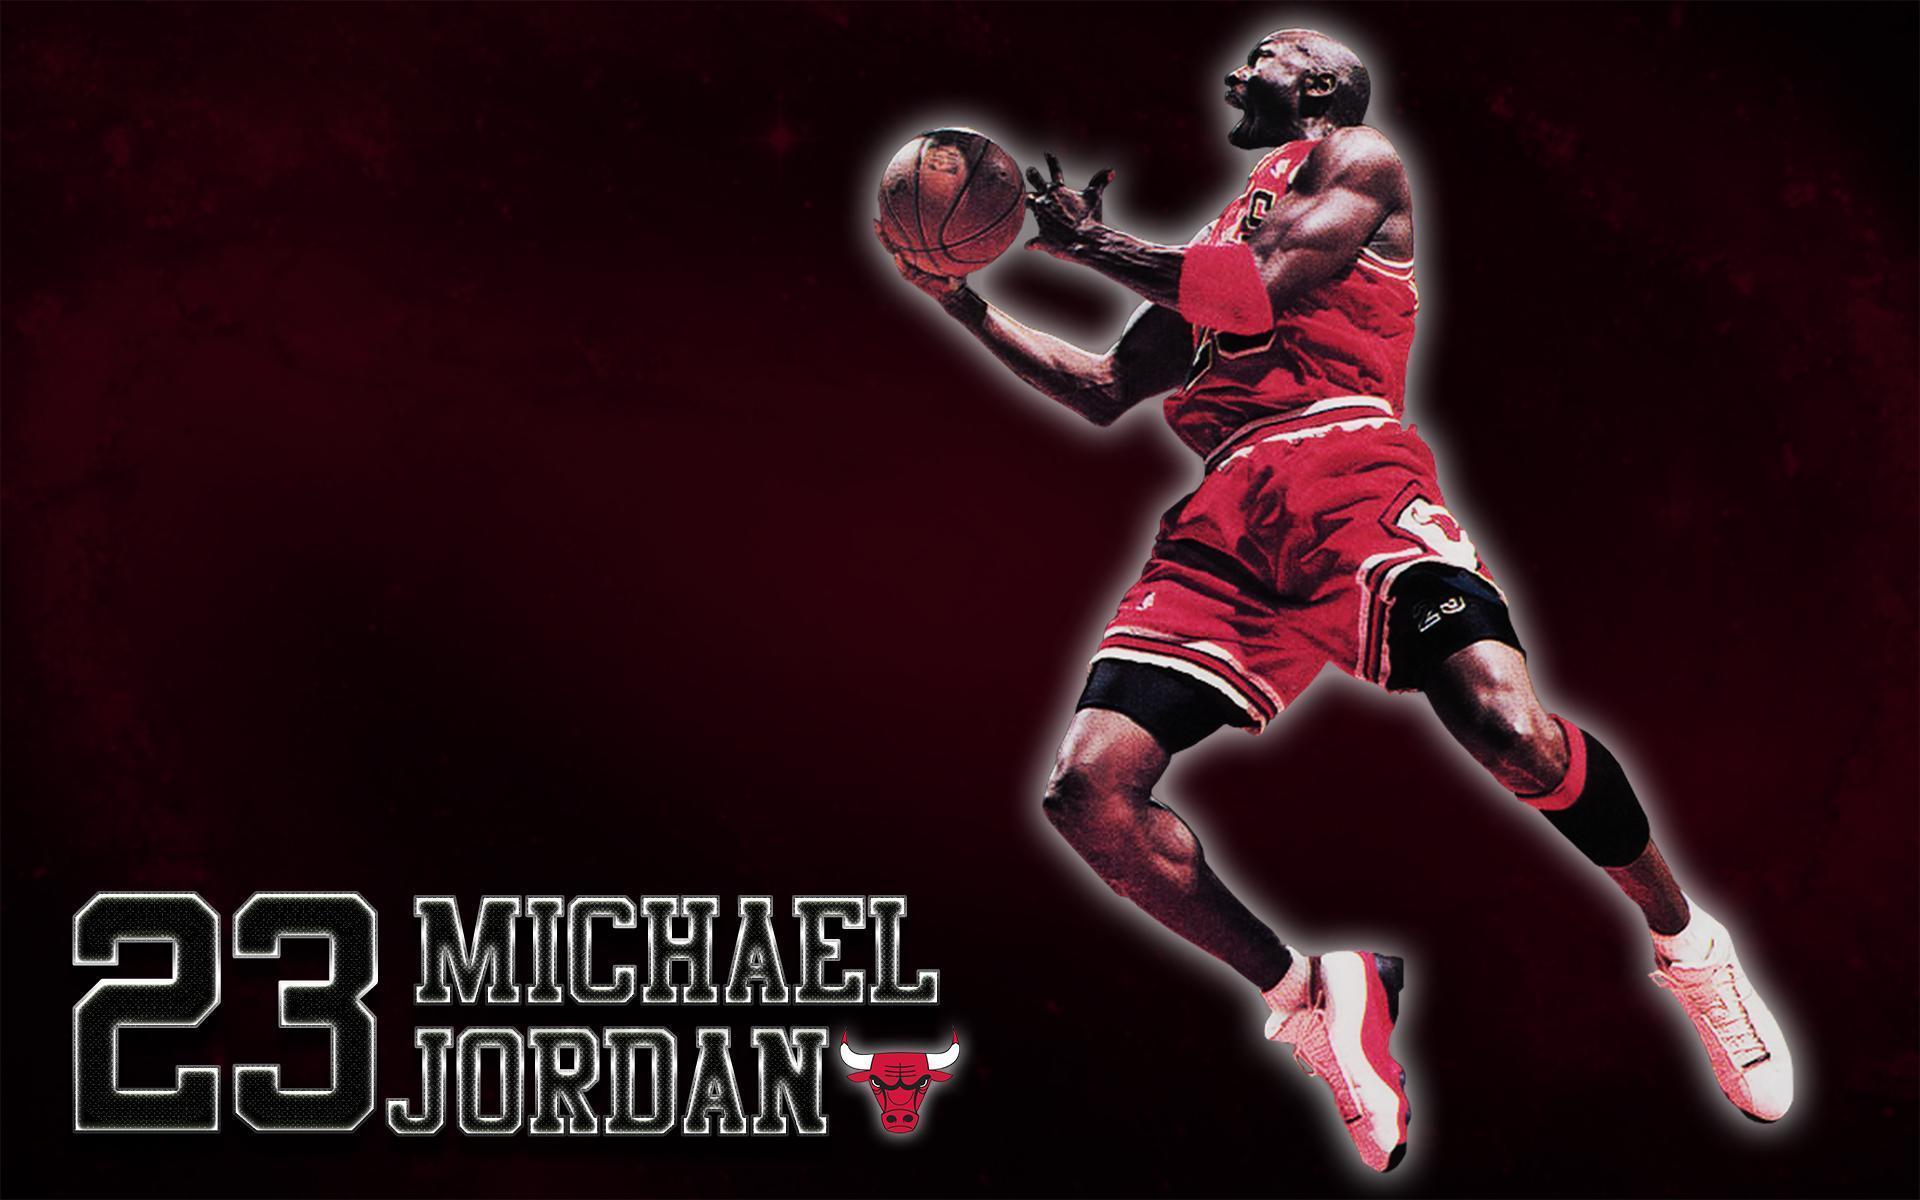 Michael Jordan Wallpaper on Frenzia.com